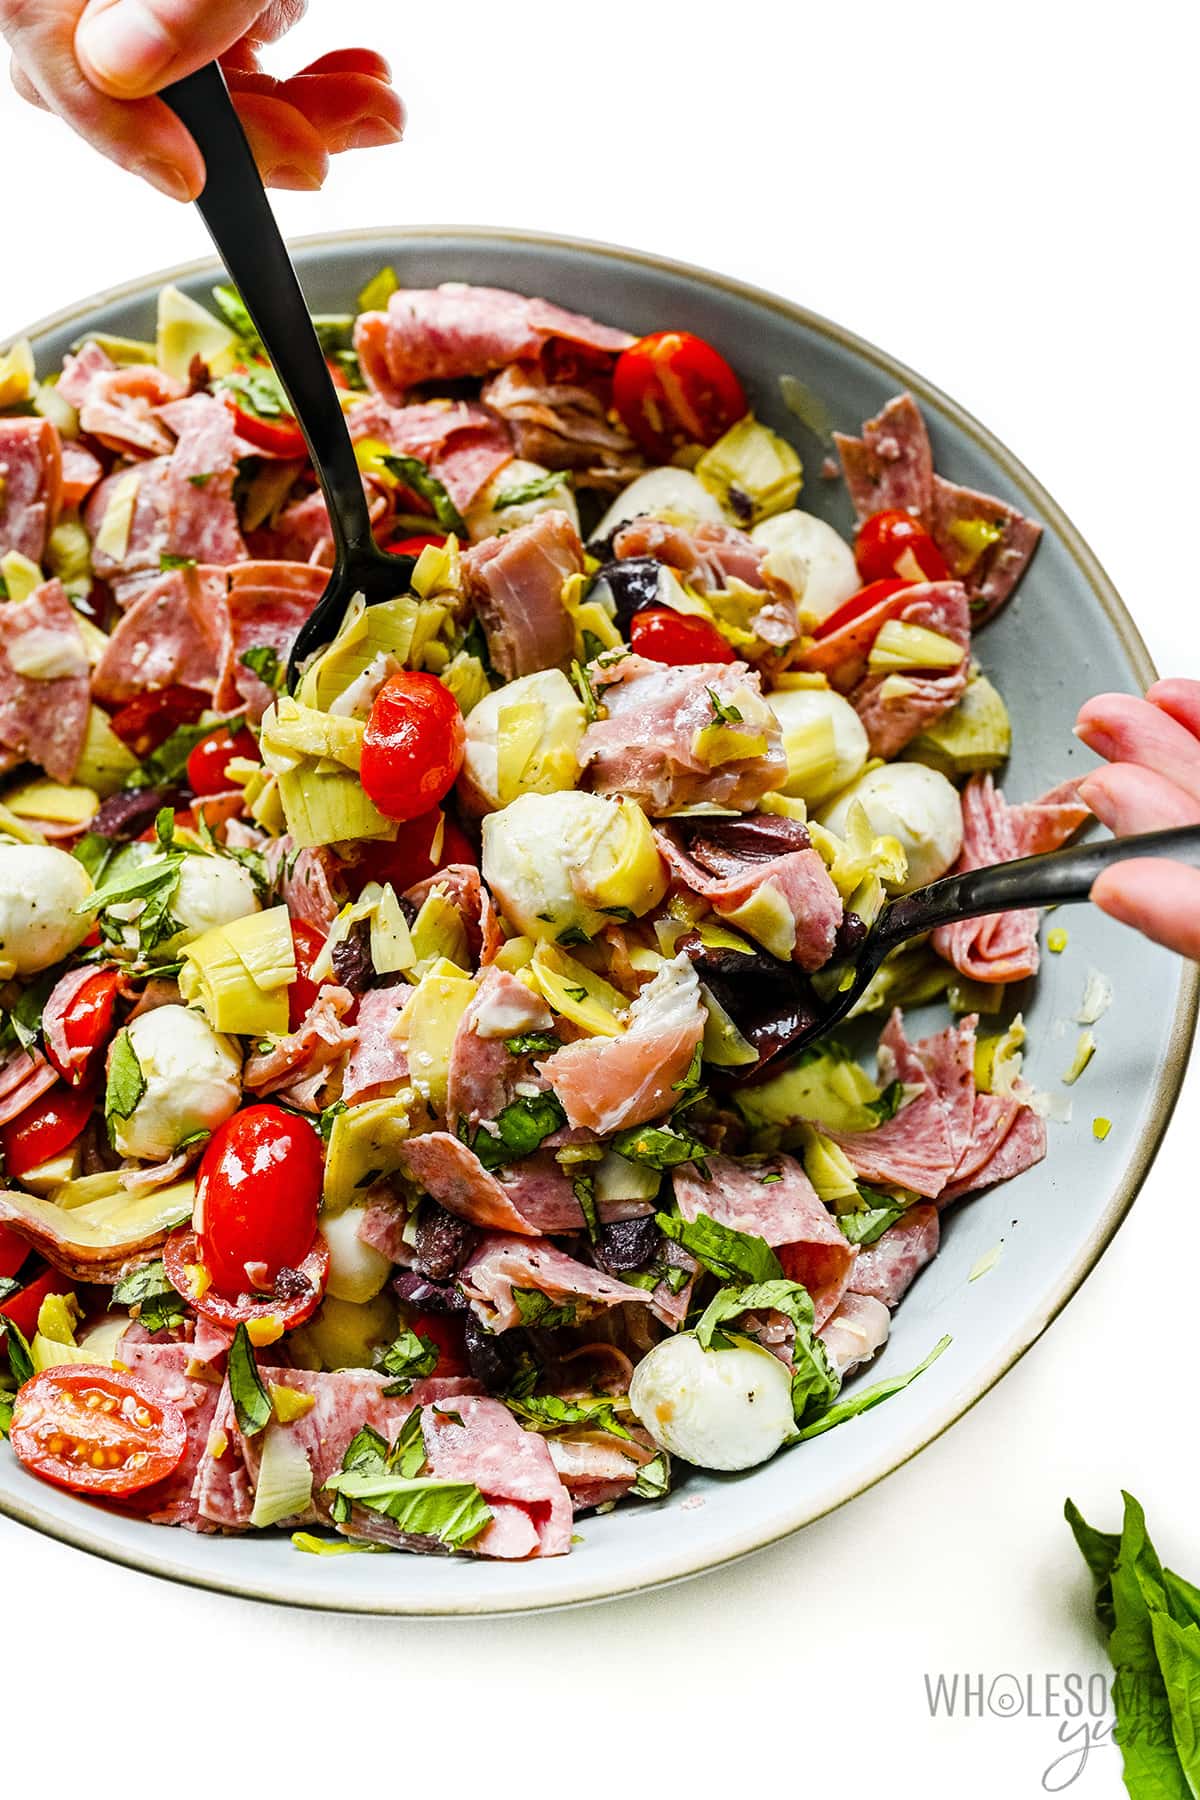 Shrimp Salad Recipe (10 Minutes!) - Wholesome Yum